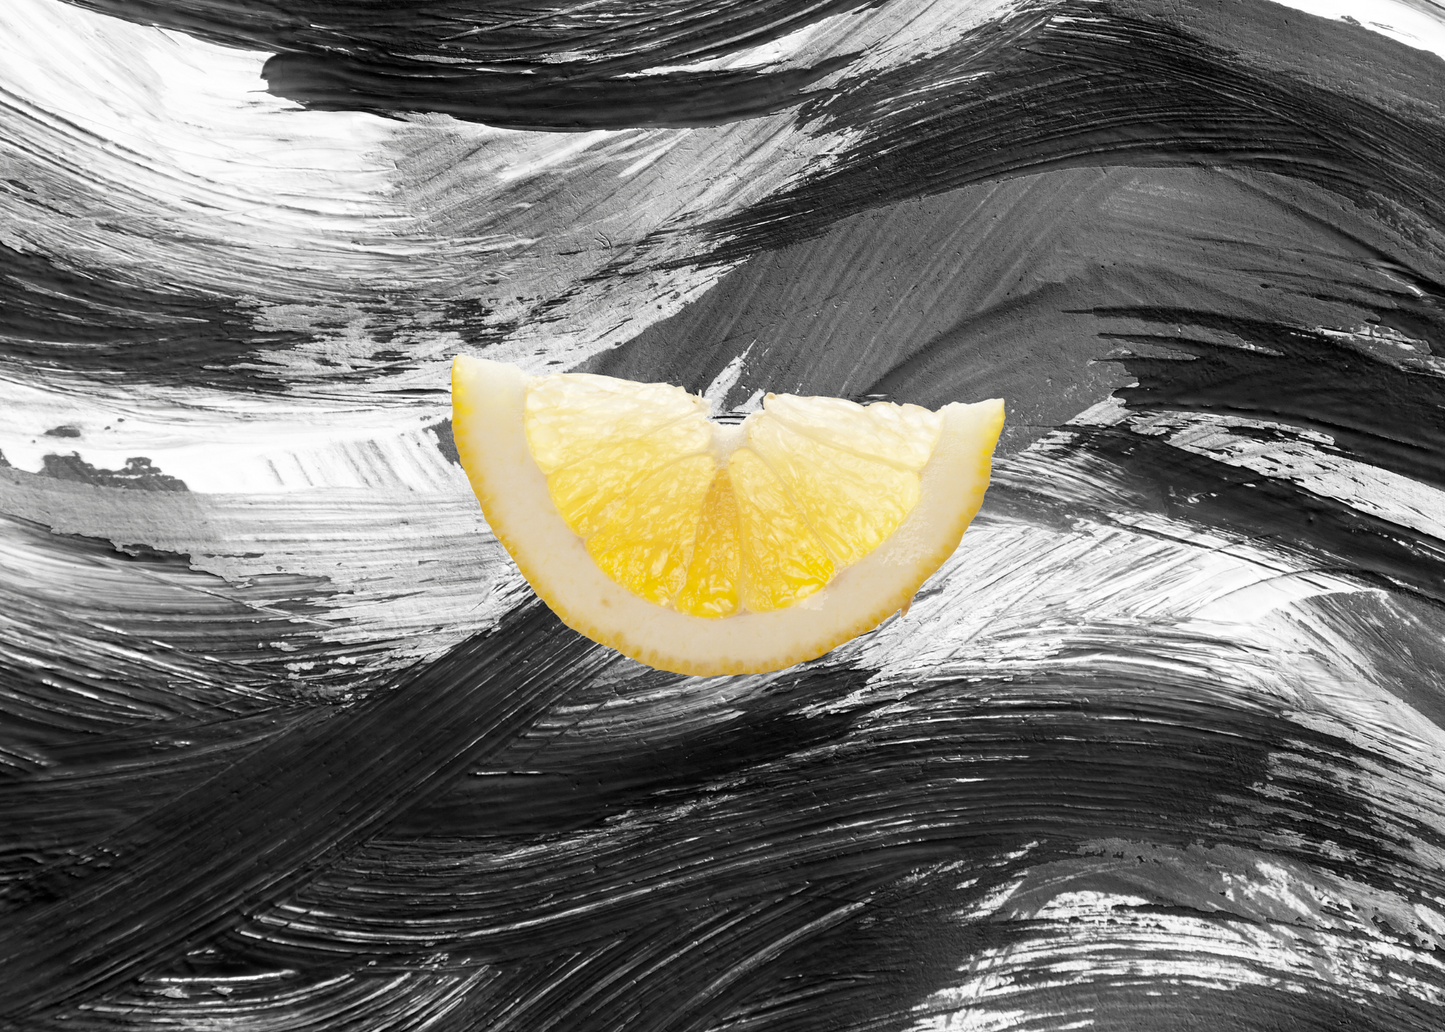 Black & White Lemon Art Prints